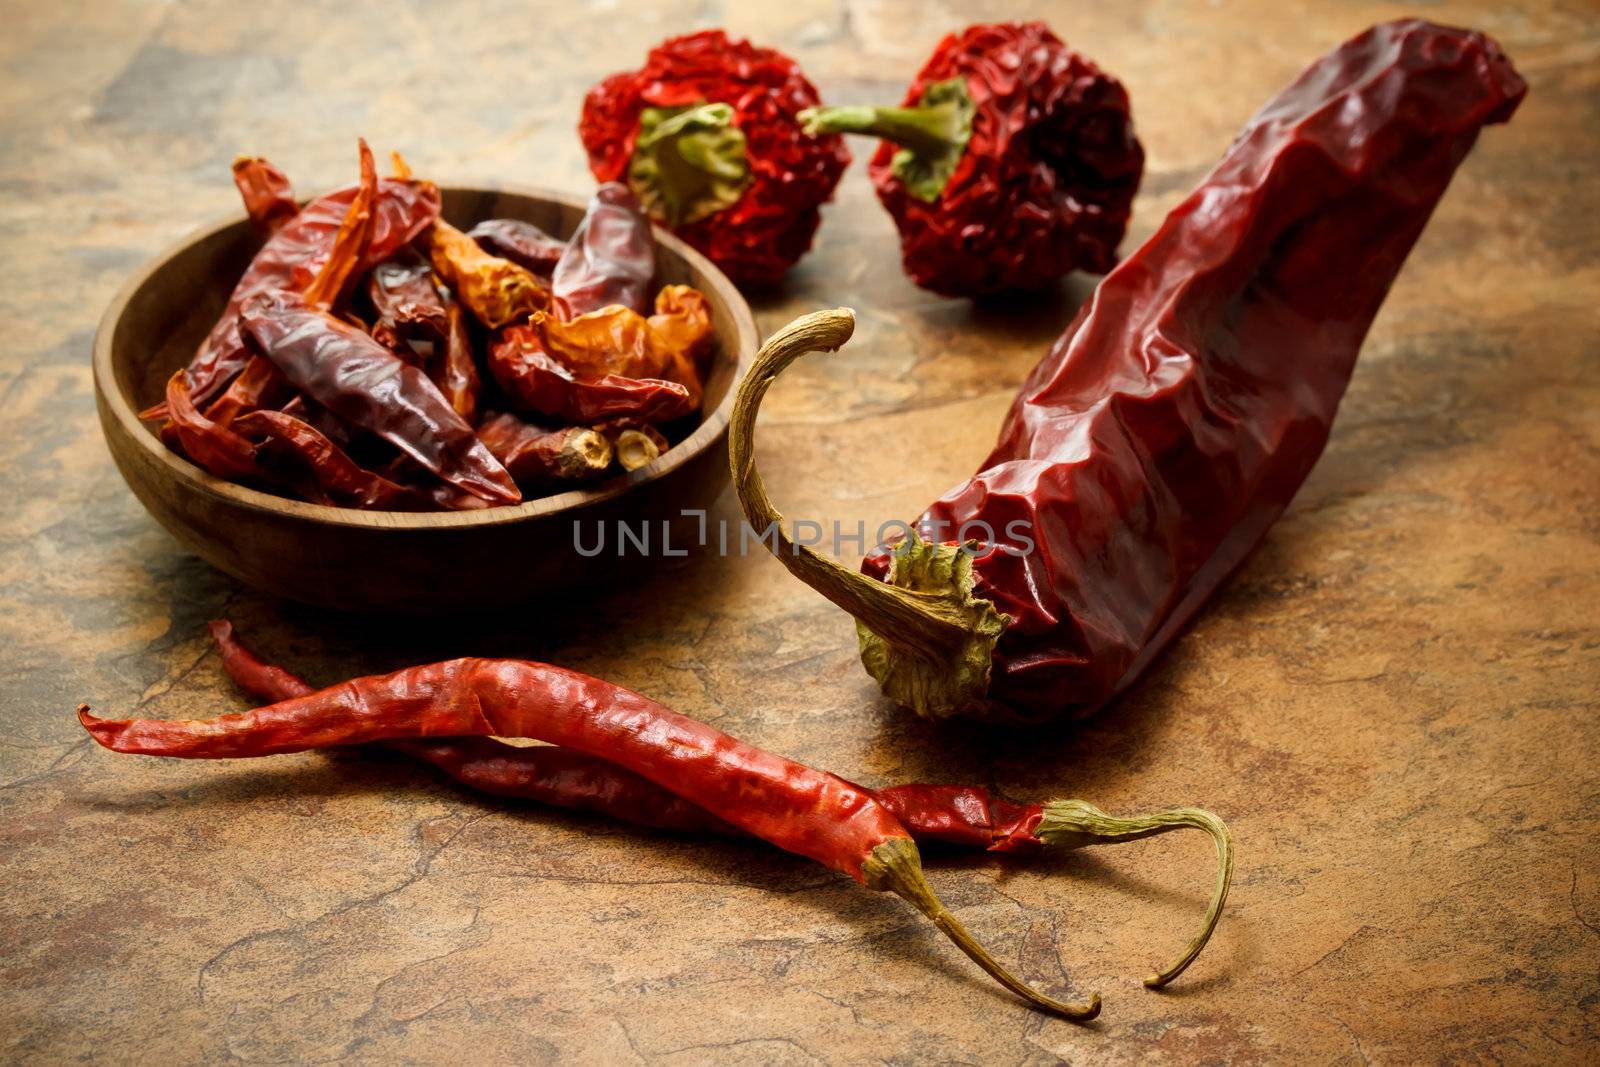 Assortment of chili peppers    by melpomene